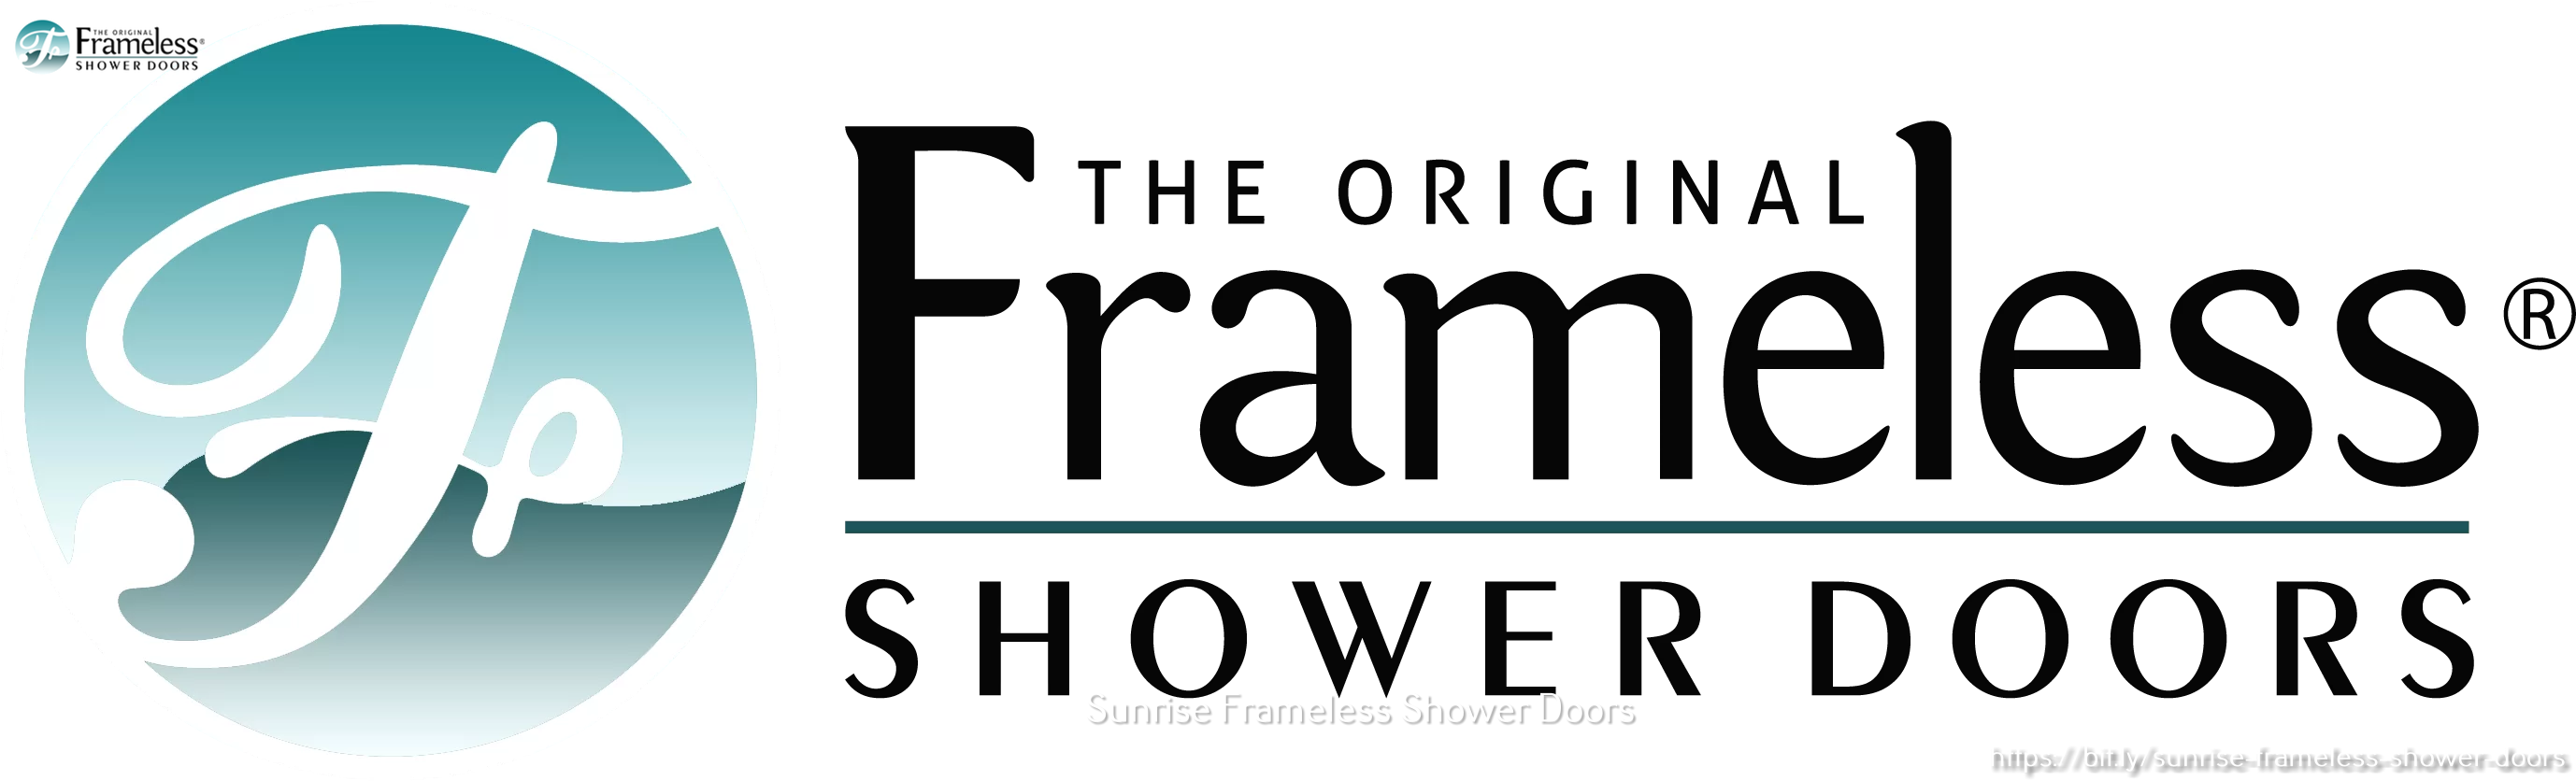 The Original Frameless Shower Doors Spotlights The Qualities Of An Excellent Frameless Shower Doors Company In Sunrise, FL.